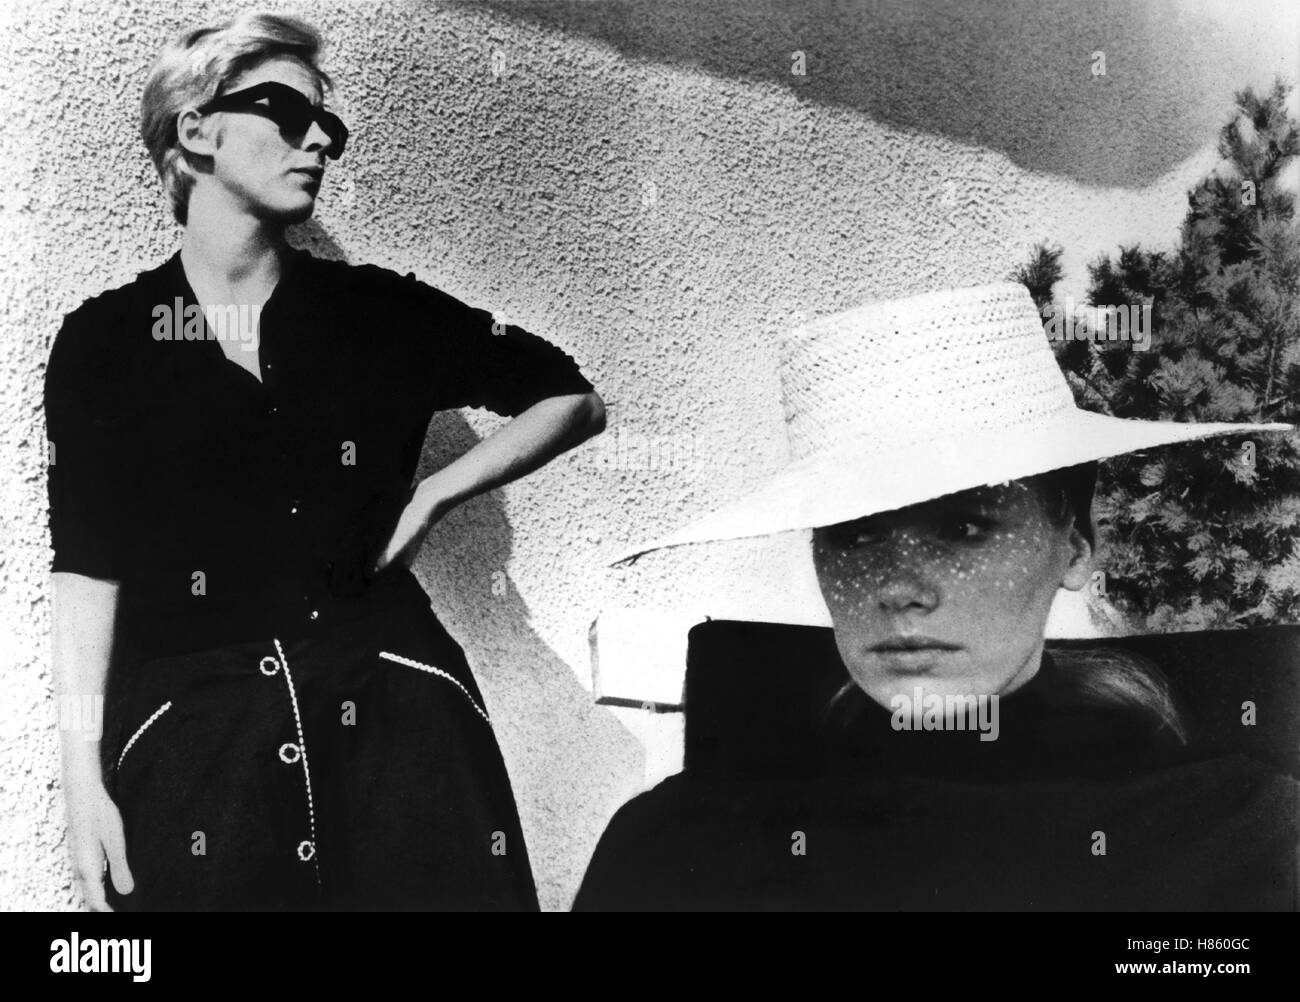 Persona, (PERSONA) SWE 1966 s/w, Regie: Ingmar Bergman, BIBI ANDERSSON, LIV ULLMANN, Key: Sonnebrille, Strohut Stock Photo